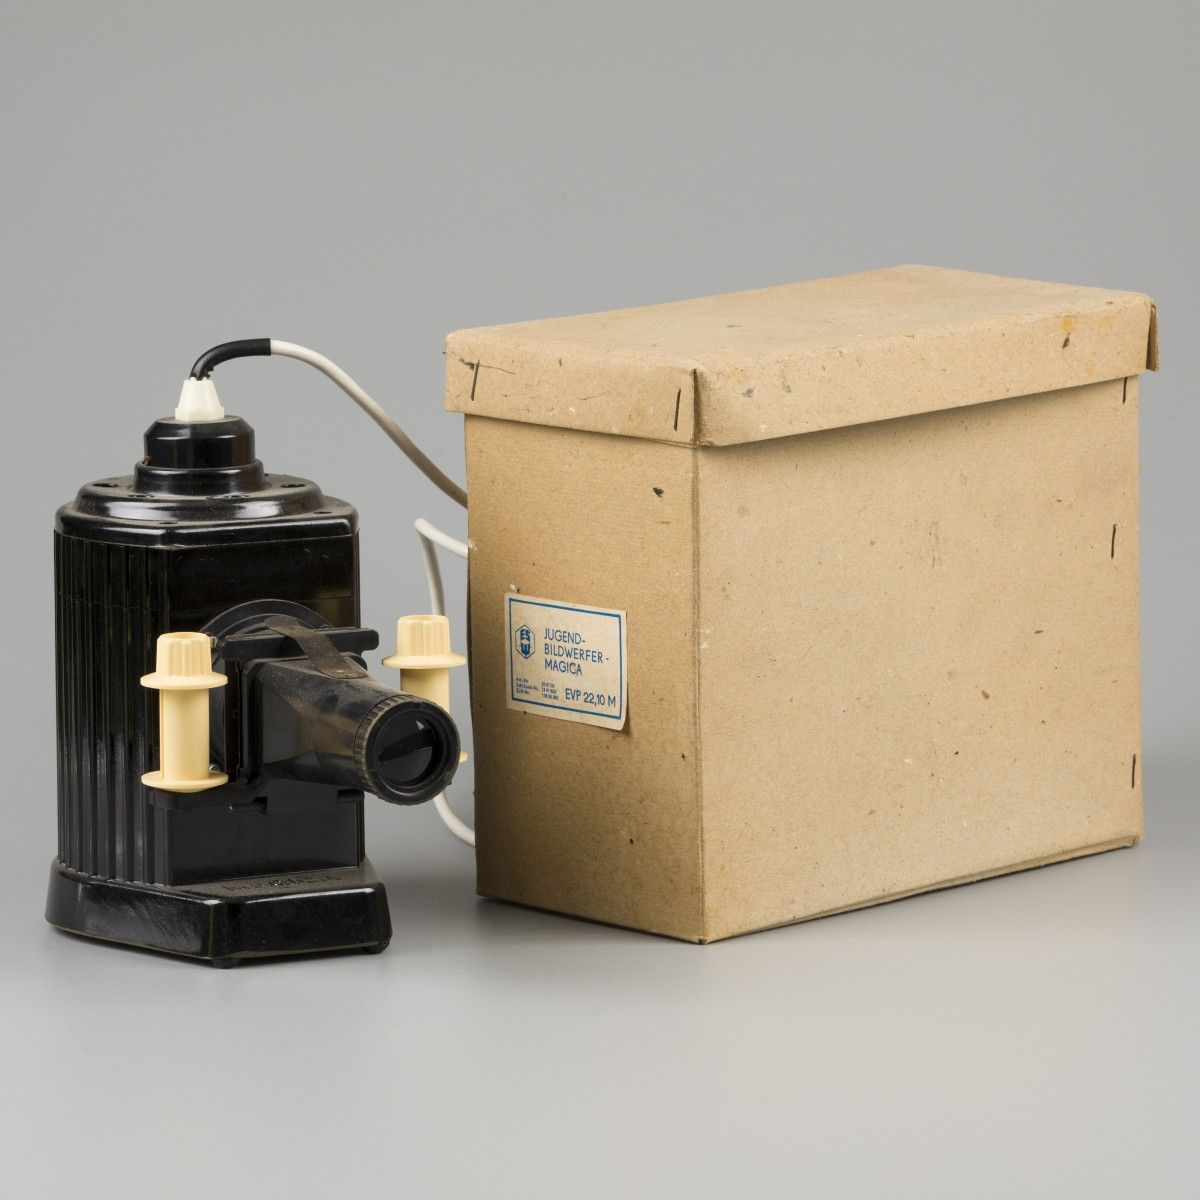 A bakelite magic lantern "Jugend Bildwerfer-Magica" EVP 22,10 mm. In scatola ori&hellip;